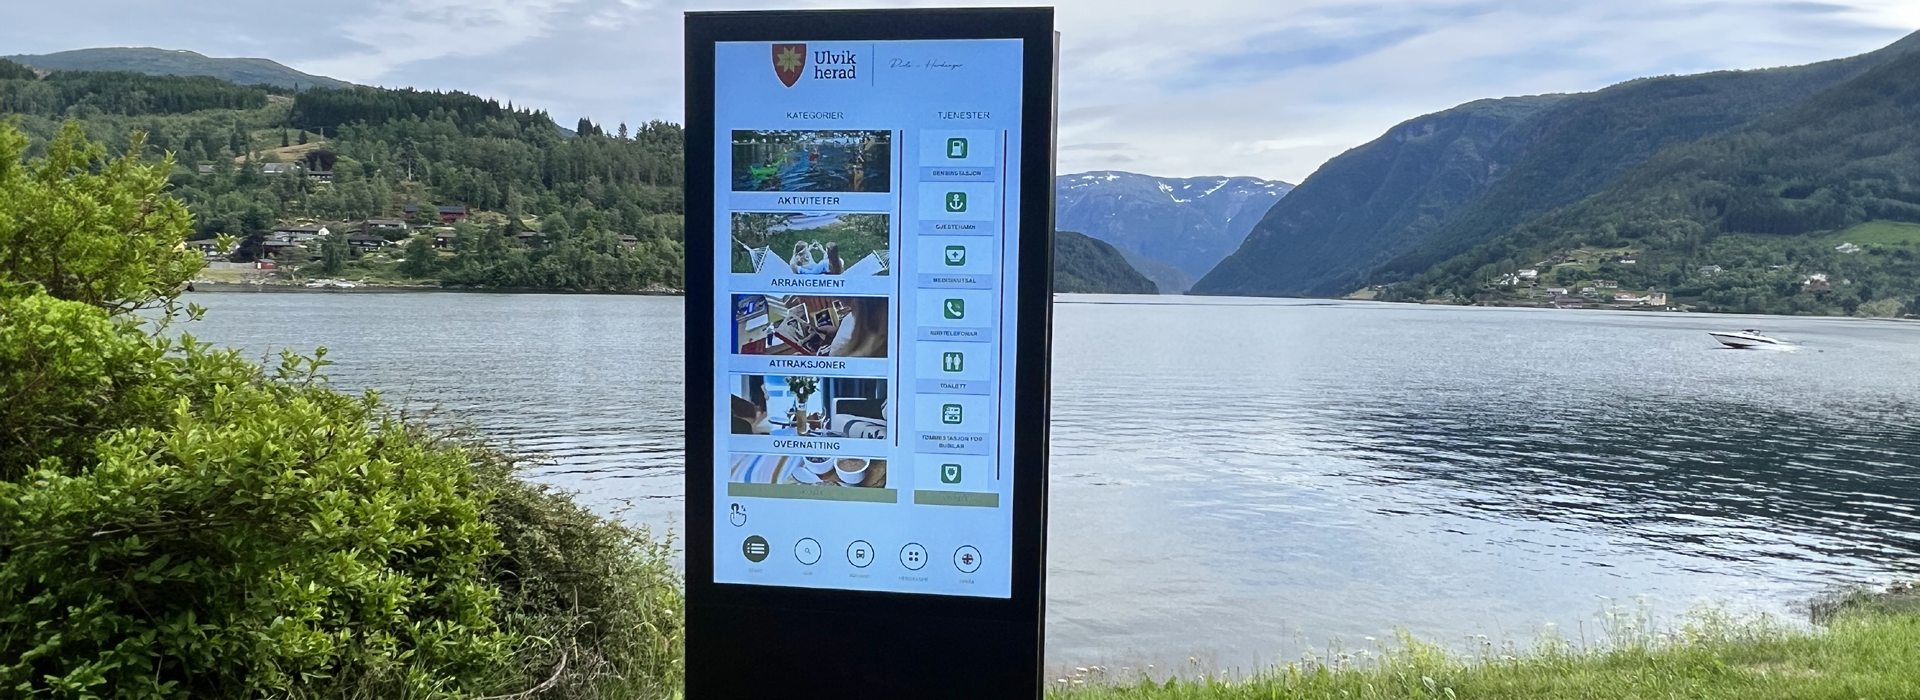 Procon Digital TuristVert i Ulvik